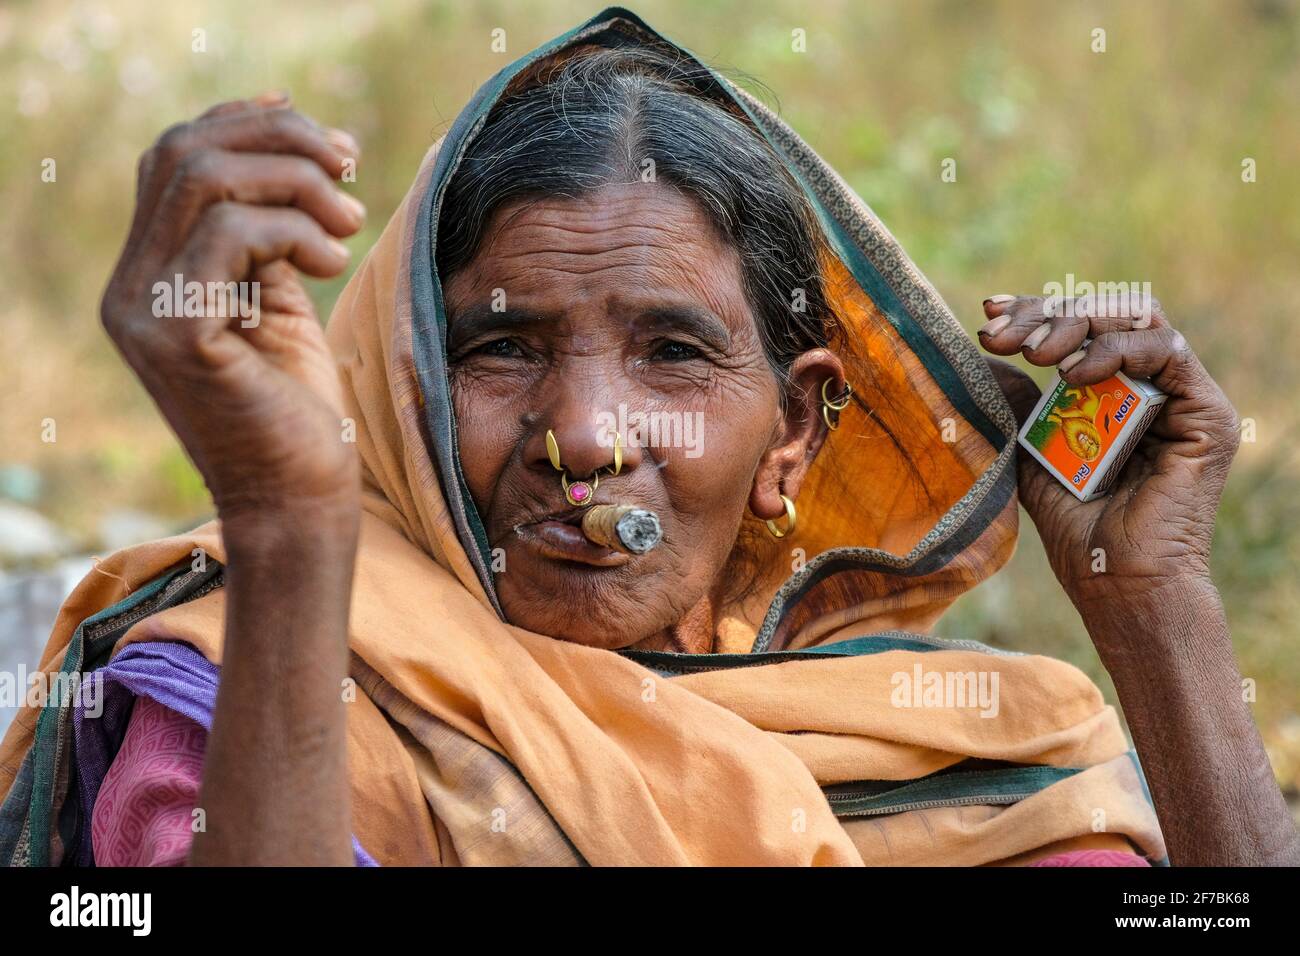 Chatikona, India - February 2021: An Adivasi woman from the Desia Kondh tribe smoking in the Chatikona market on February 17, 2021 in Odisha, India. Stock Photo